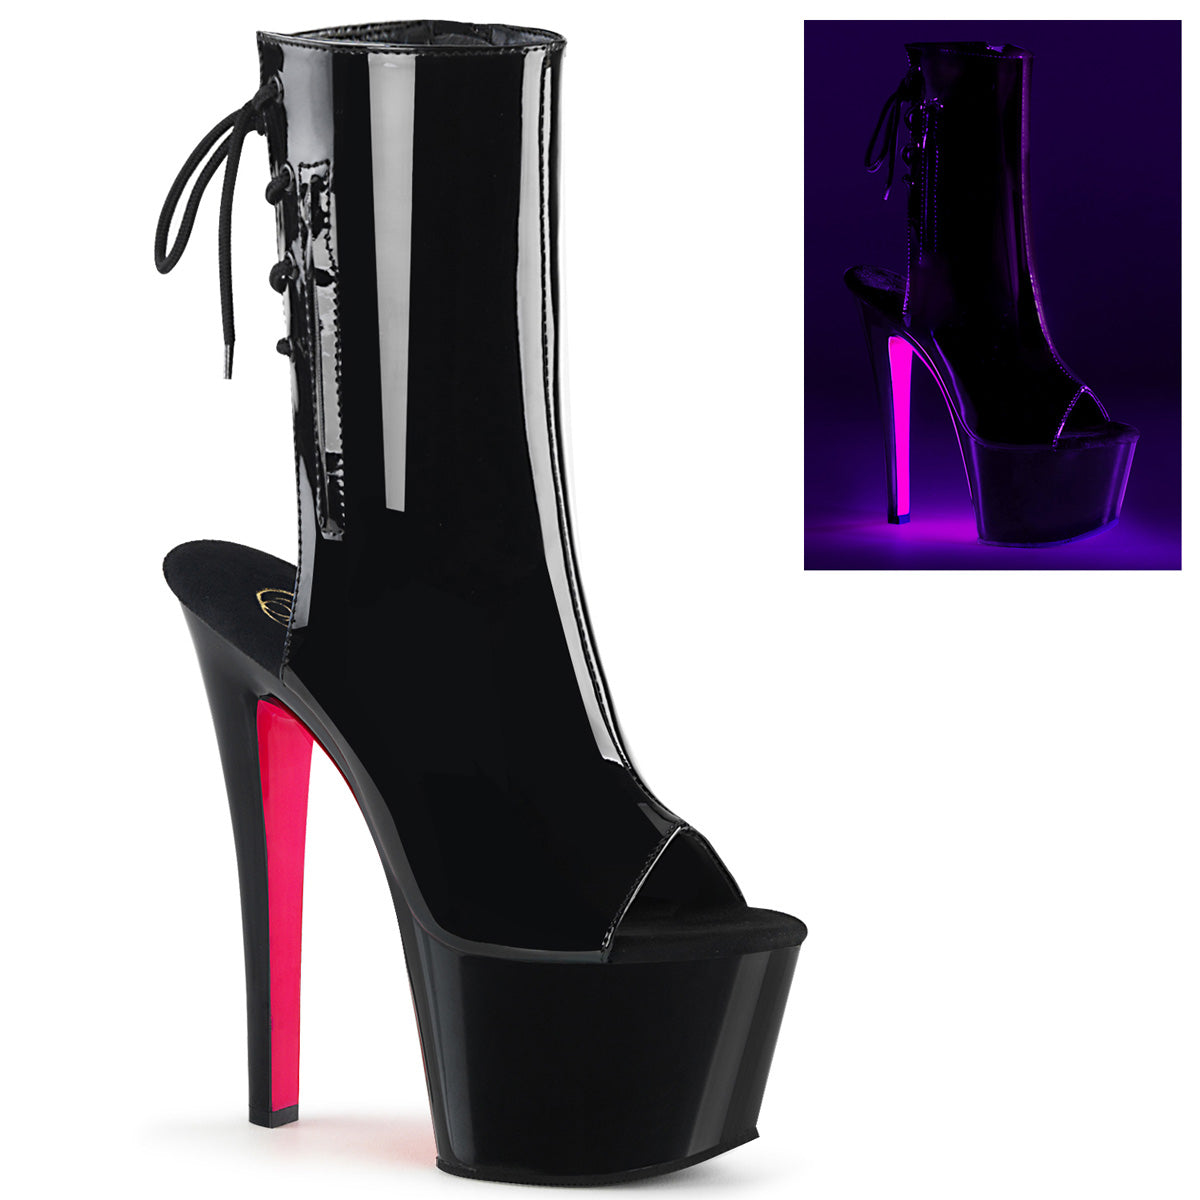 SKY-1018TT 7" Heel Black Patent Hot Pink Pole Dance Shoes